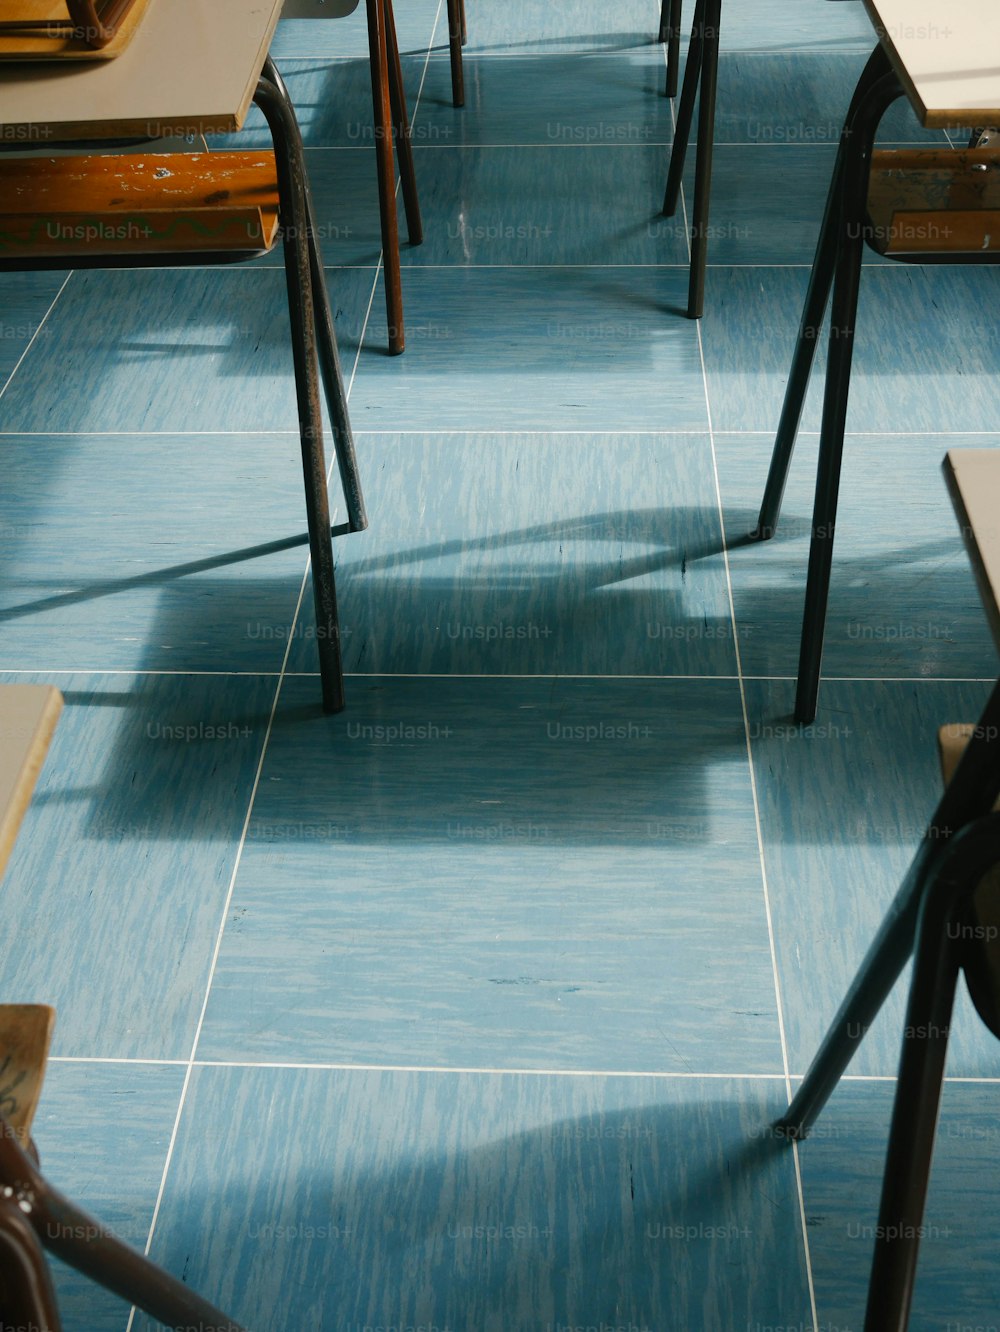 Un aula con pisos azules y escritorios de madera